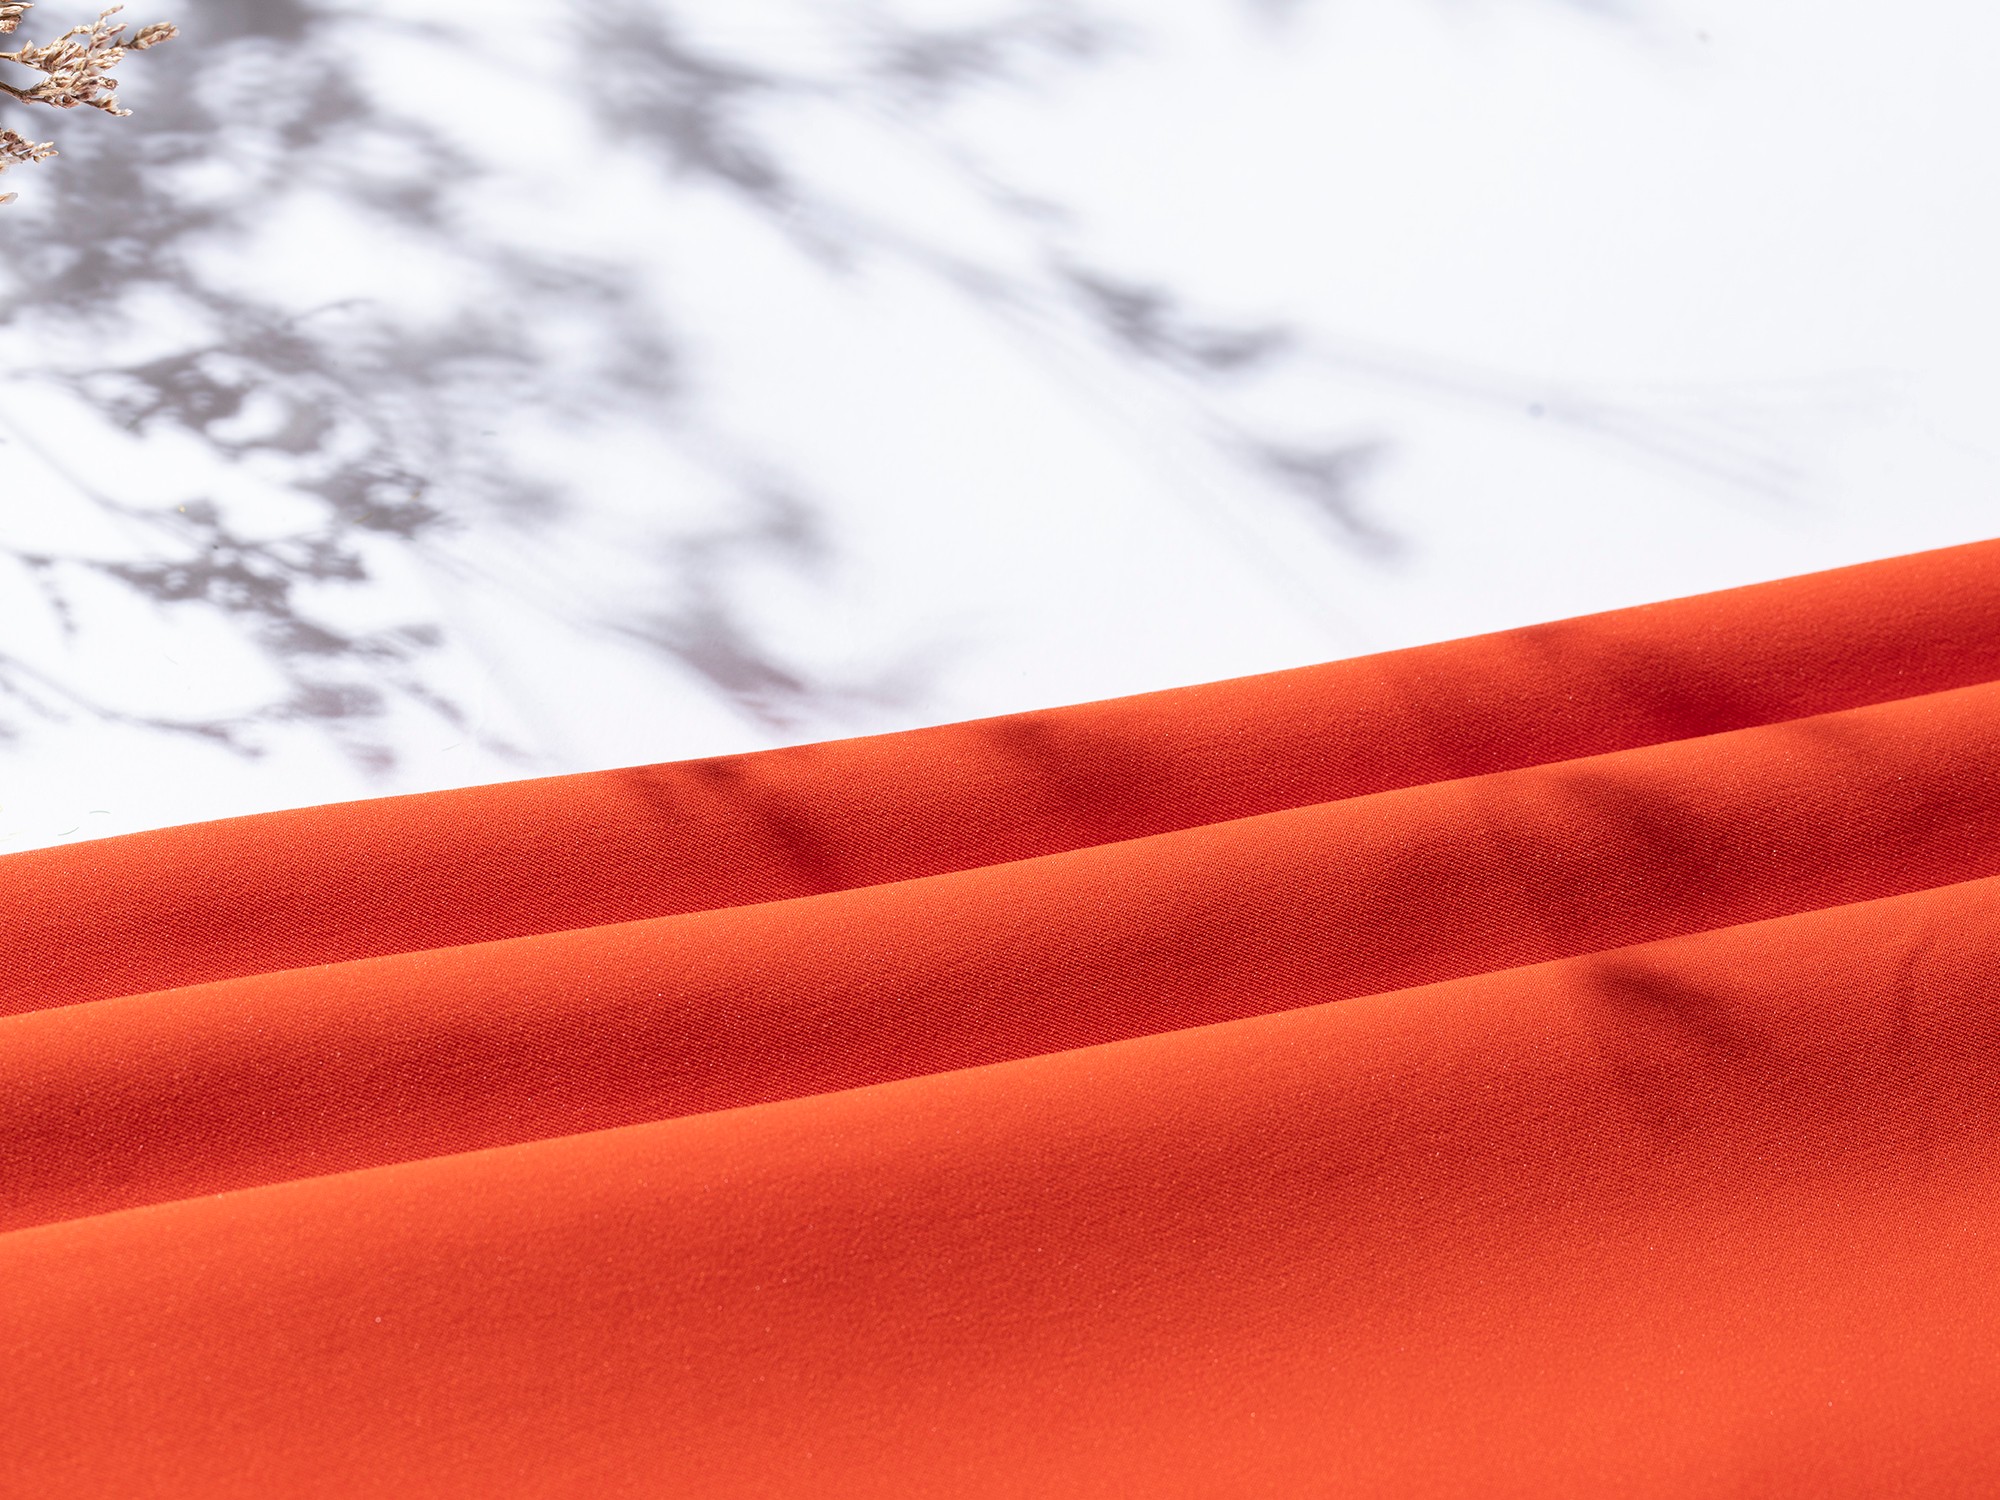 Extinction spring Asian textile - orange red